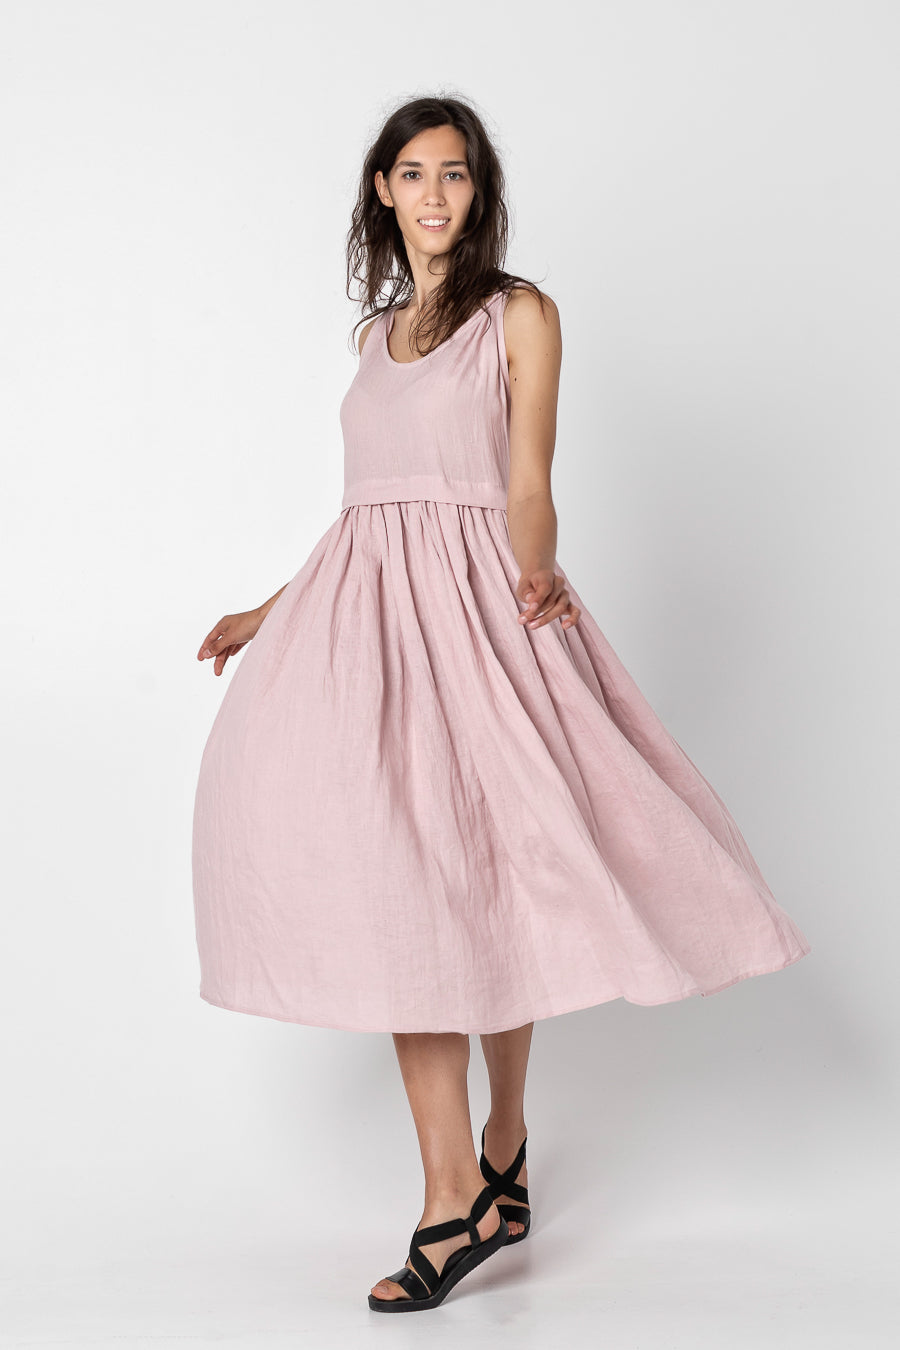 KUKLIA | Linen dress with pockets - Mezzoroni